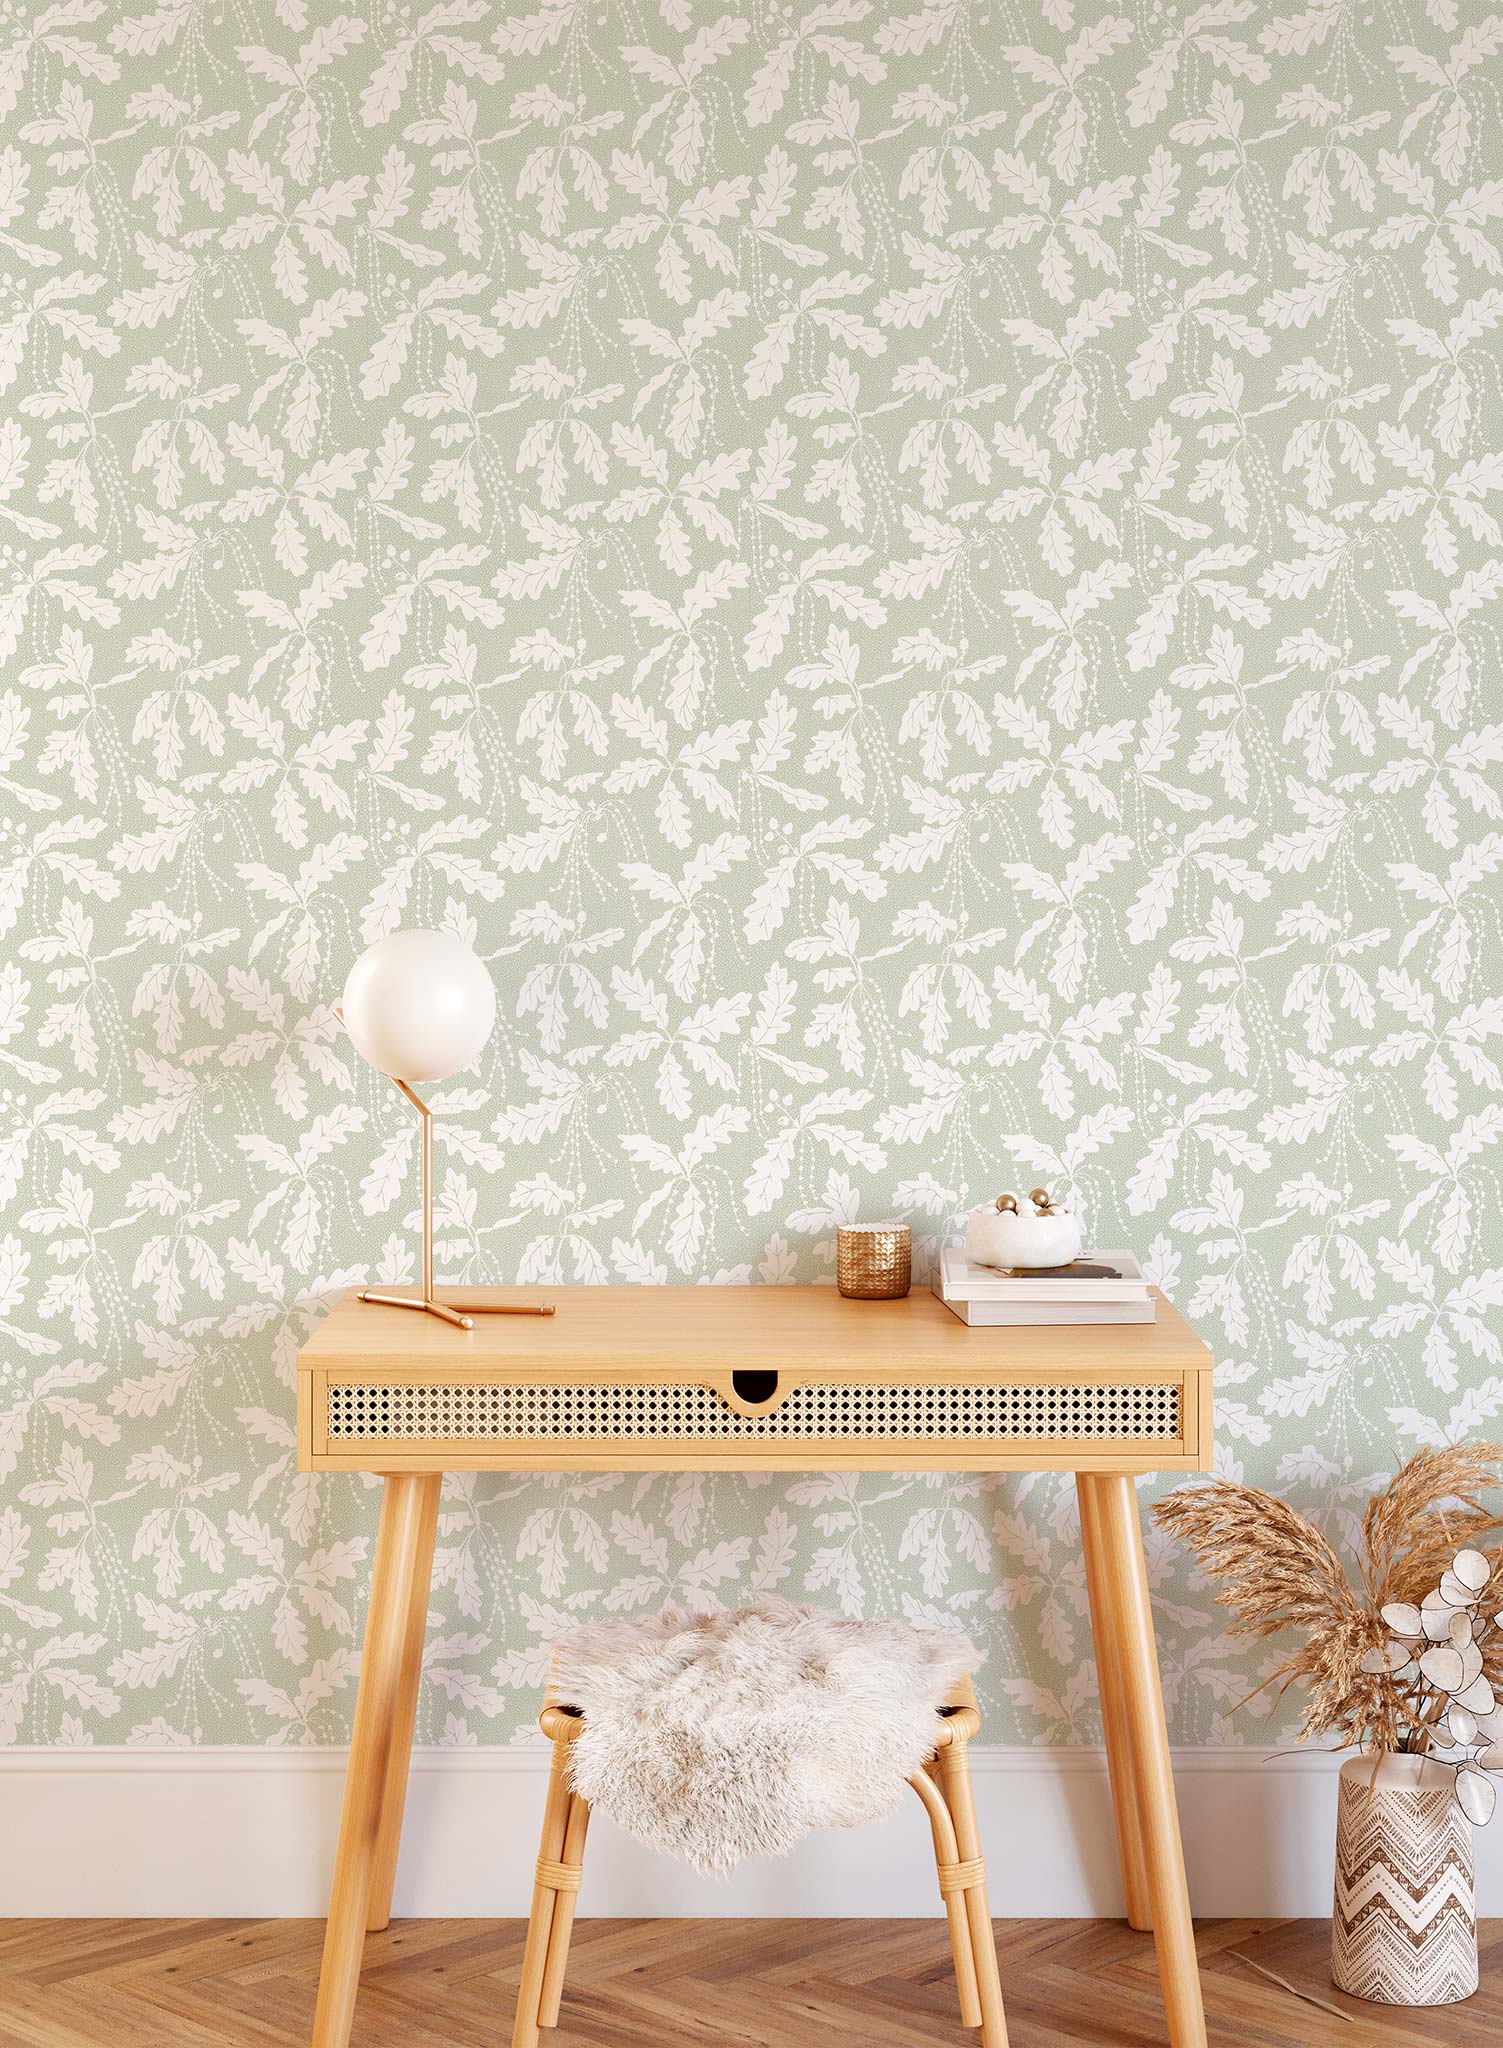 Oak Catkin is a minimalist wallpaper by Opposite Wall of leaves and catkins of oak trees.